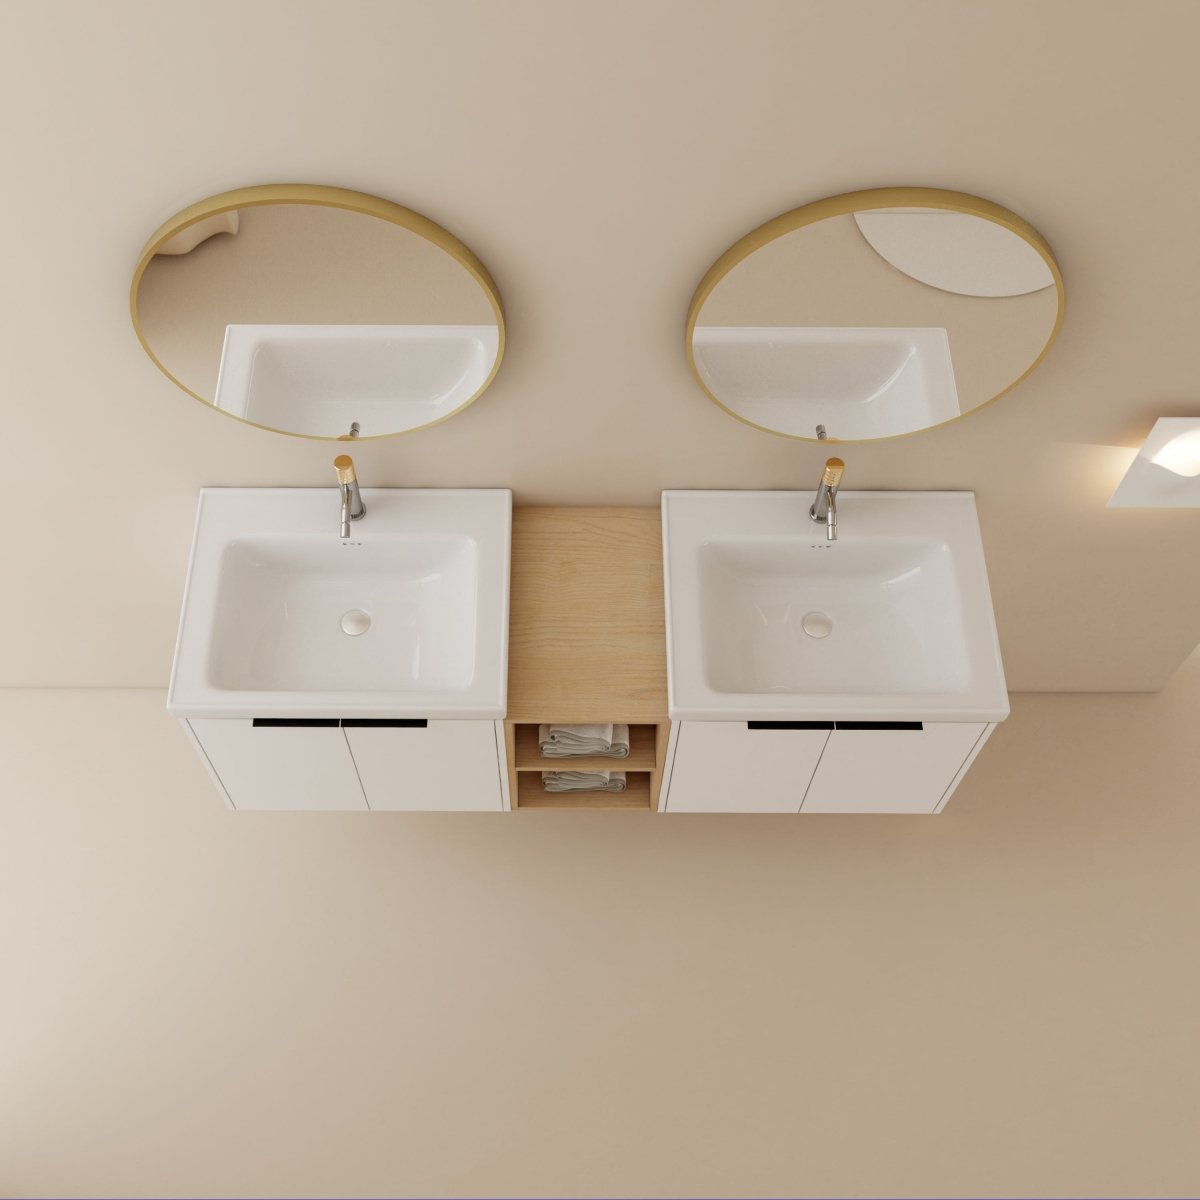 ExBrite 60 Inch Soft Close Doors Double Sink Bathroom Vanity Small Storage Shelves